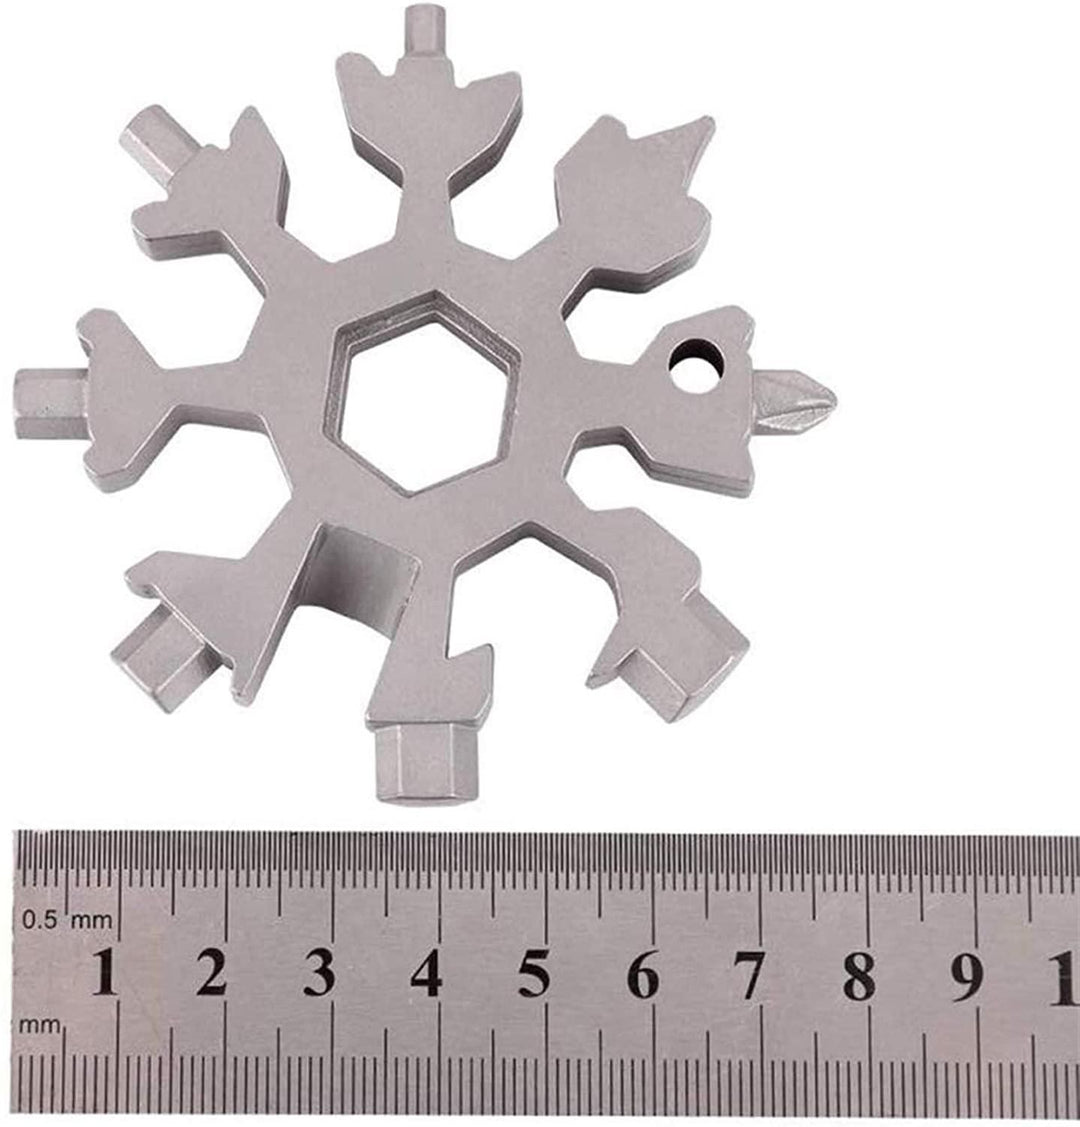 Snowflake 18 in 1 Multi-Purpose Tool (Buy 1 Get 1 Free)